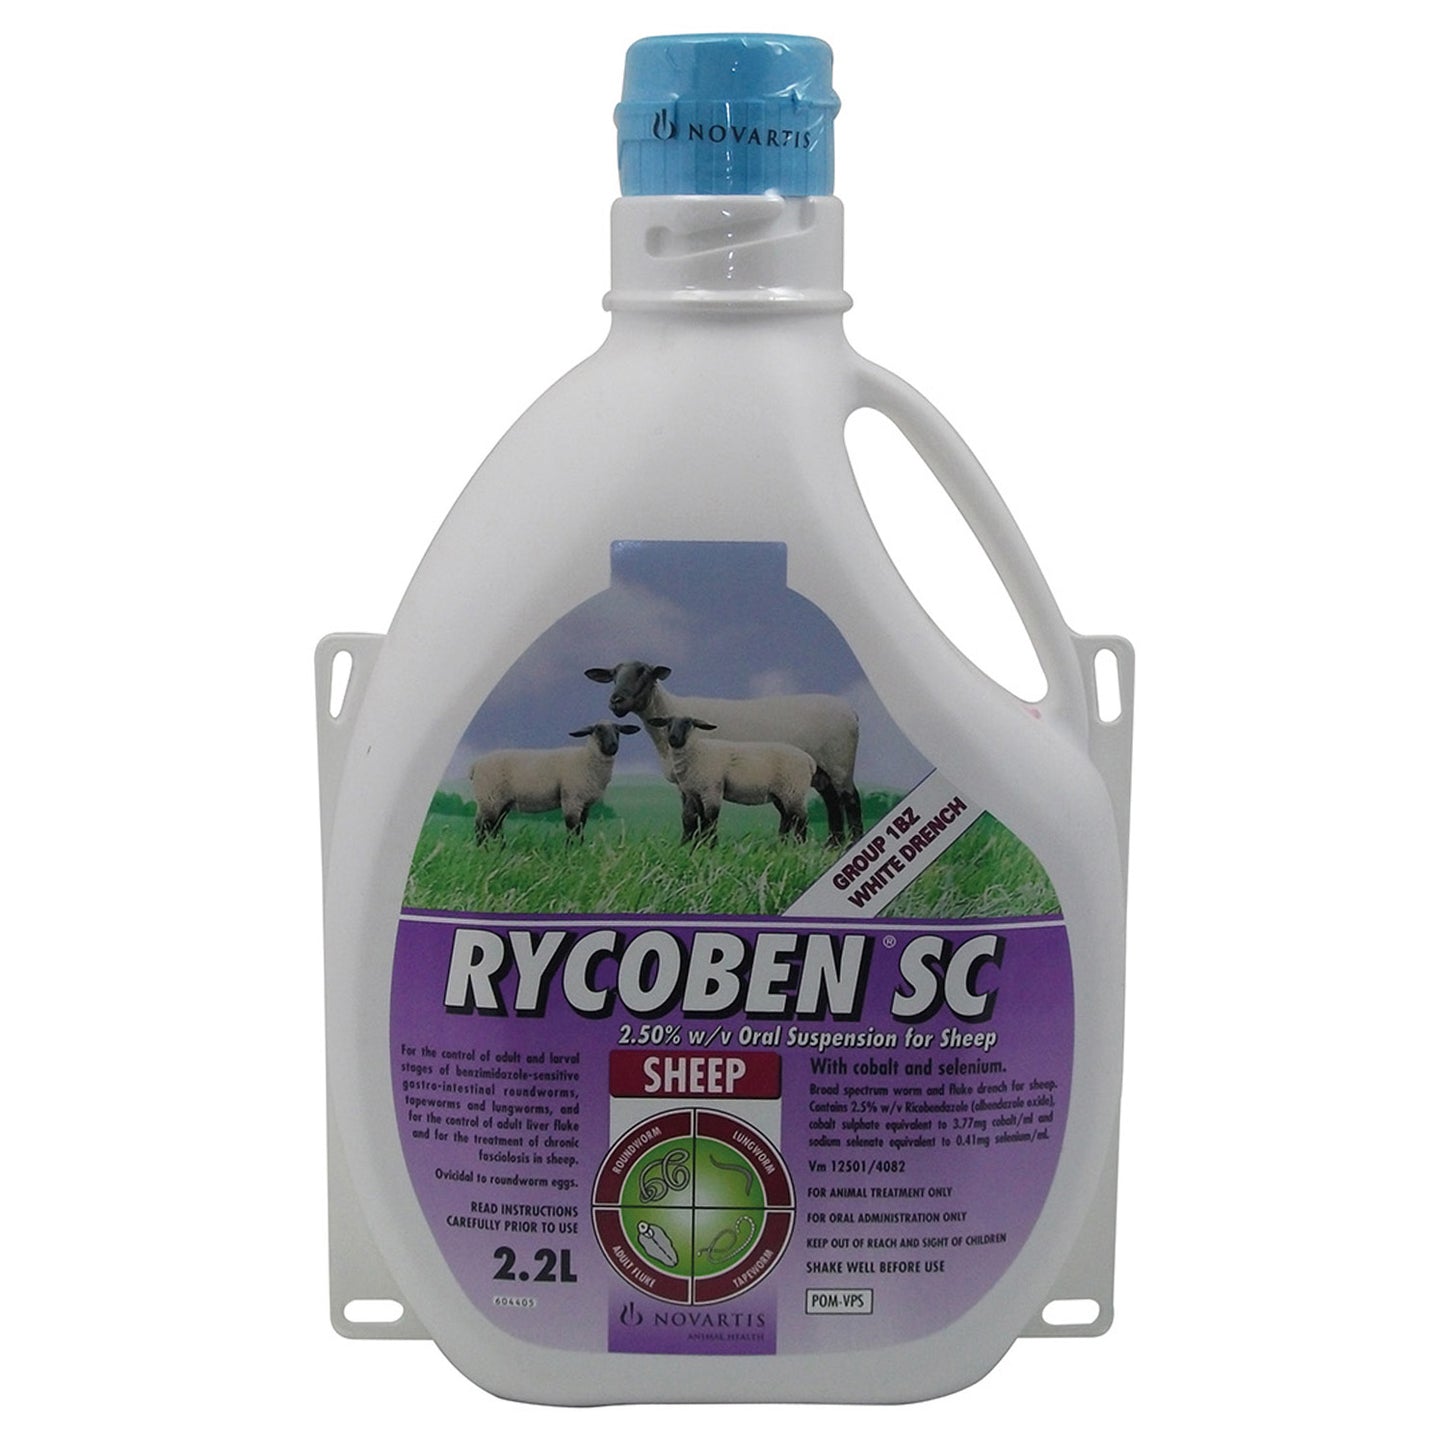 Rycoben SC 2.50 % w/v Oral Suspension for Sheep